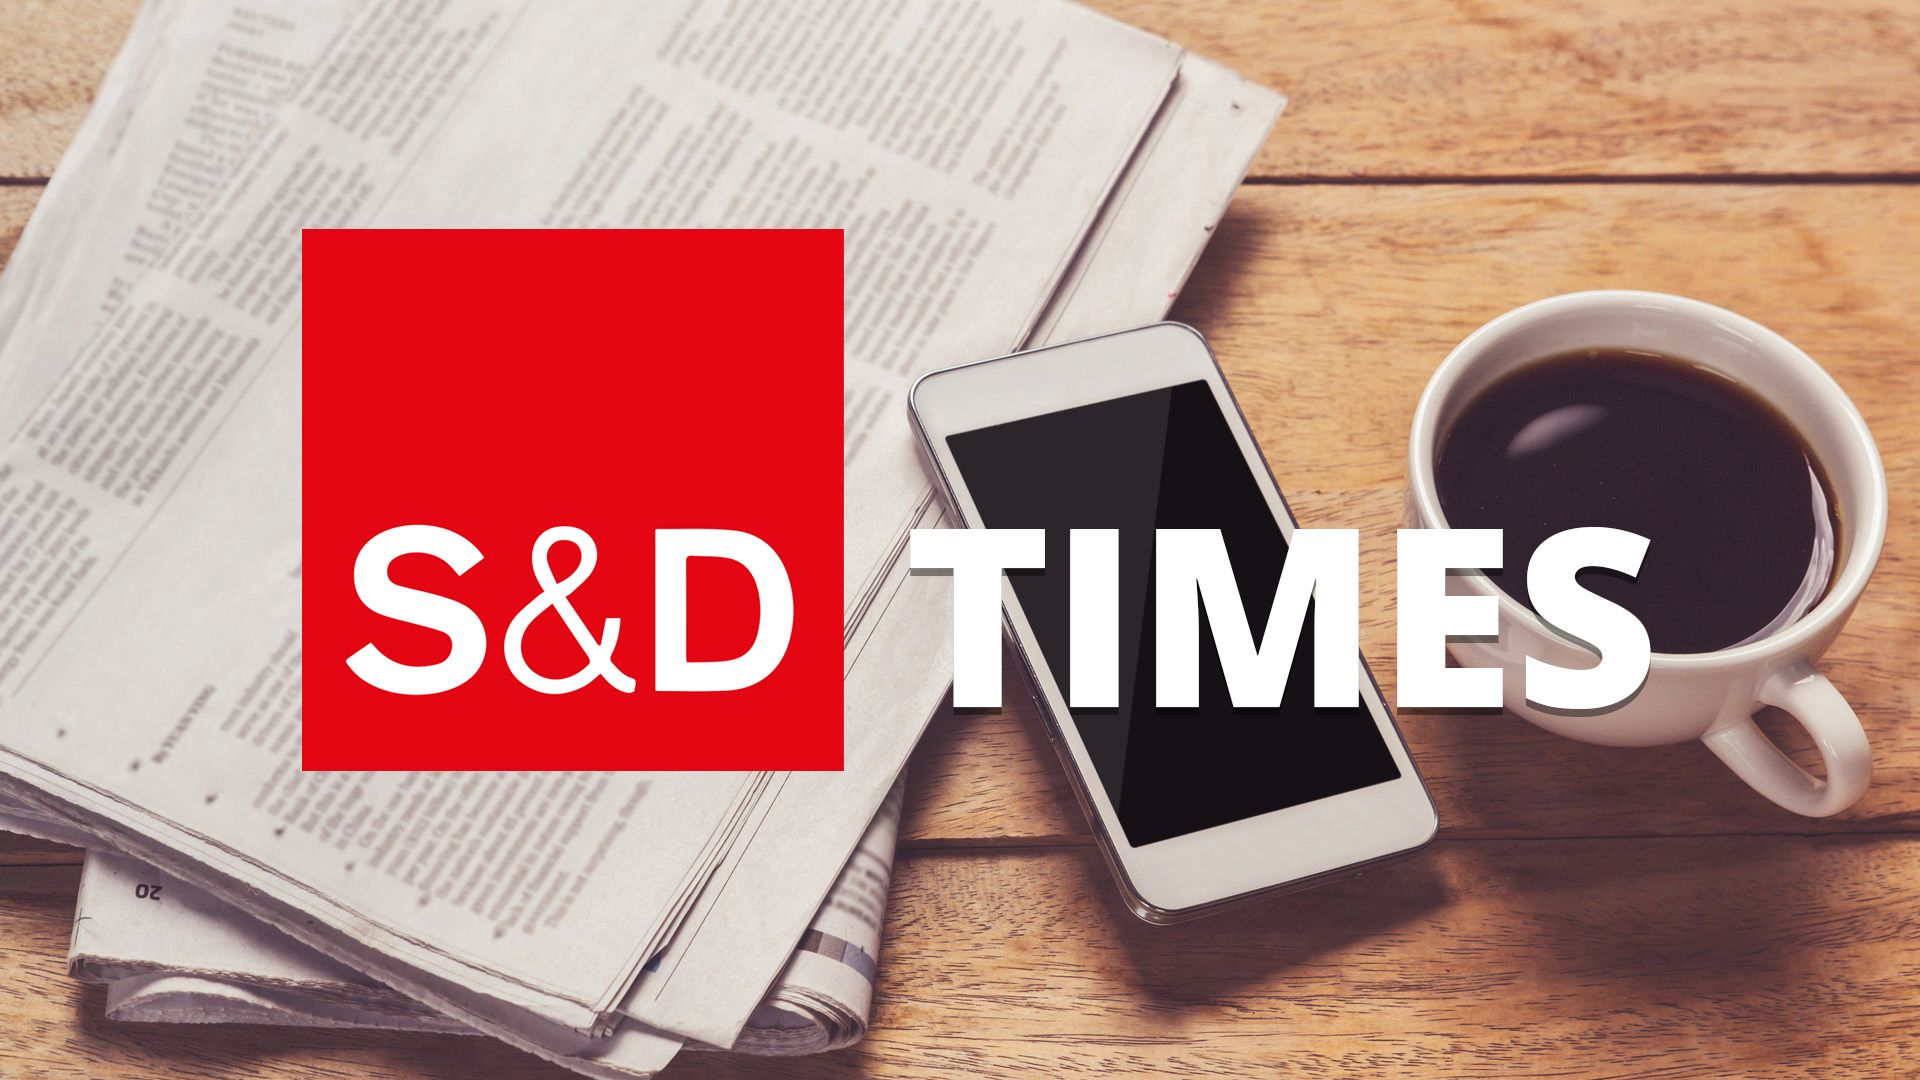 S&D Times coffee newspaper smartphone